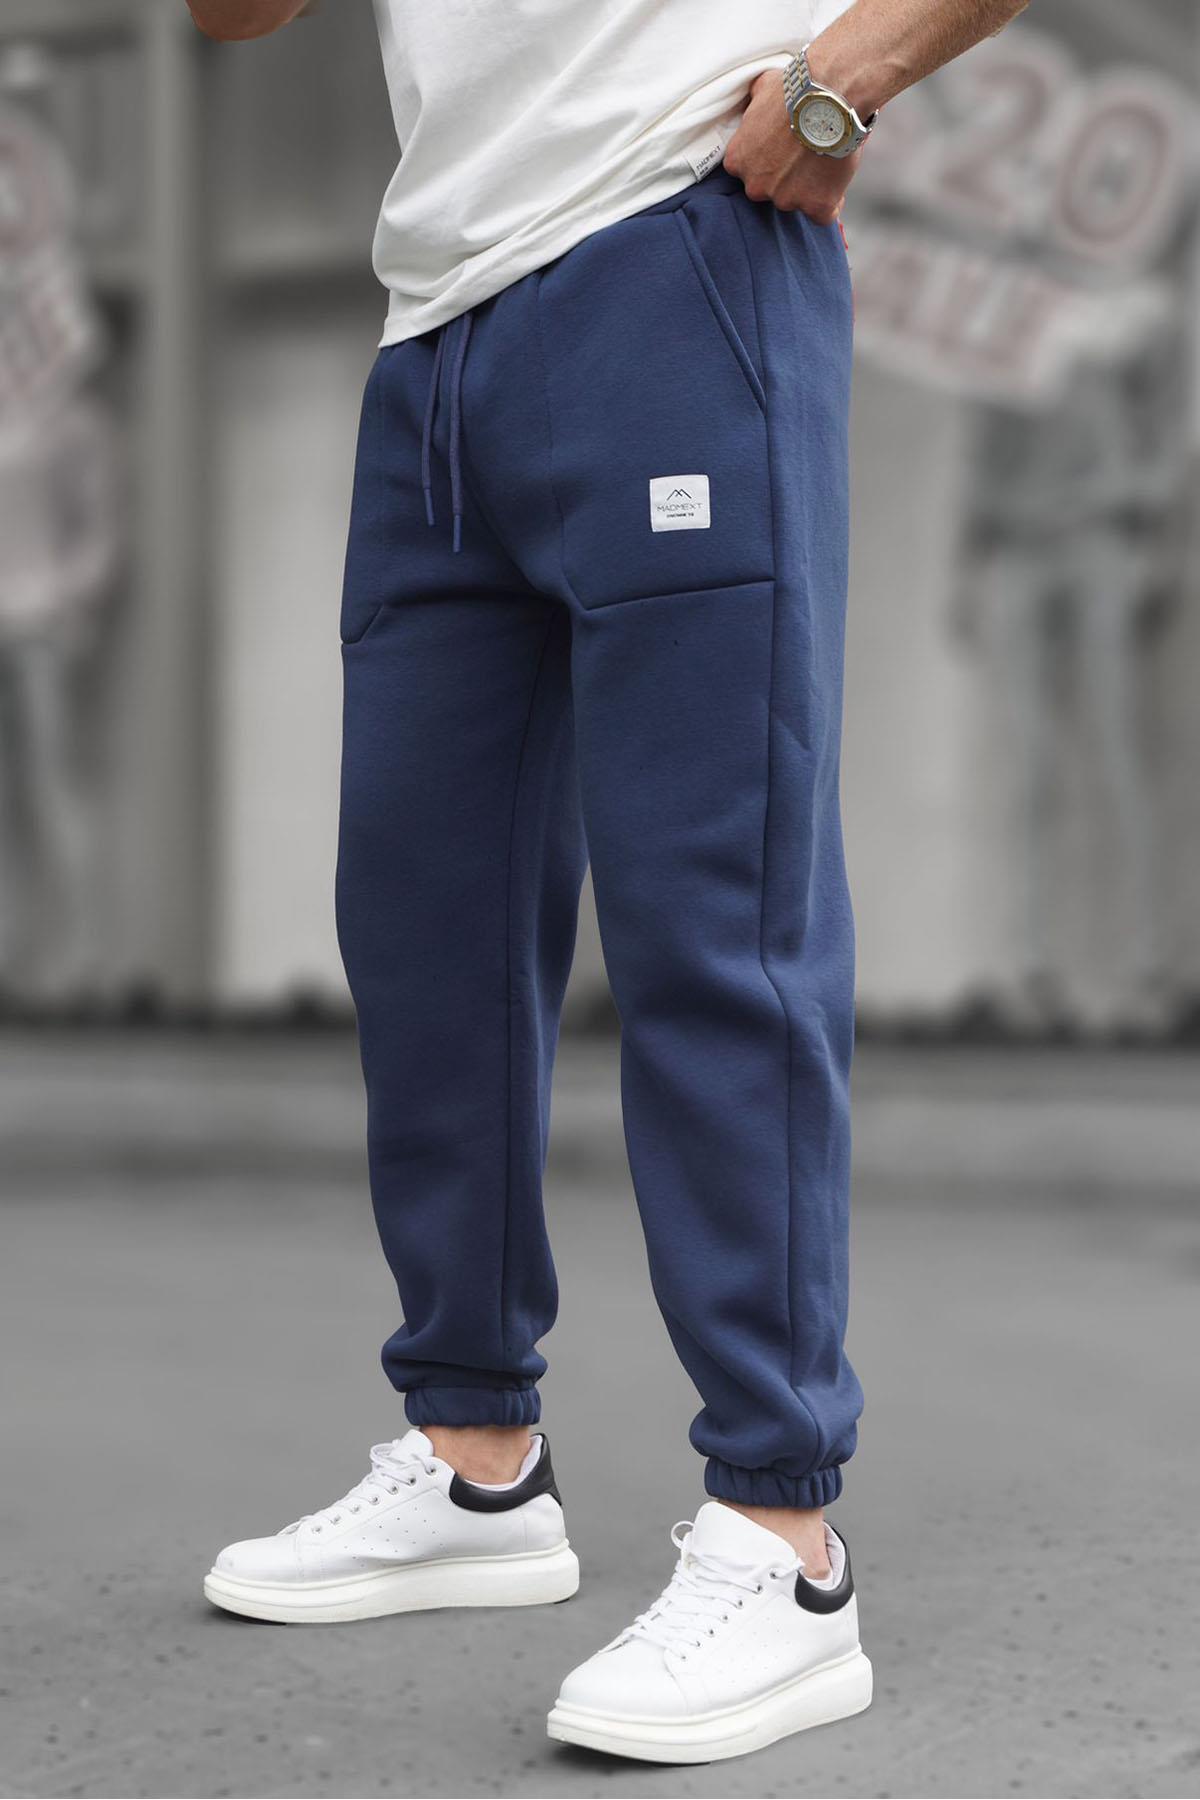 Madmext Navy Blue Pocket Detailed Men's Basic Sweatpants 6522